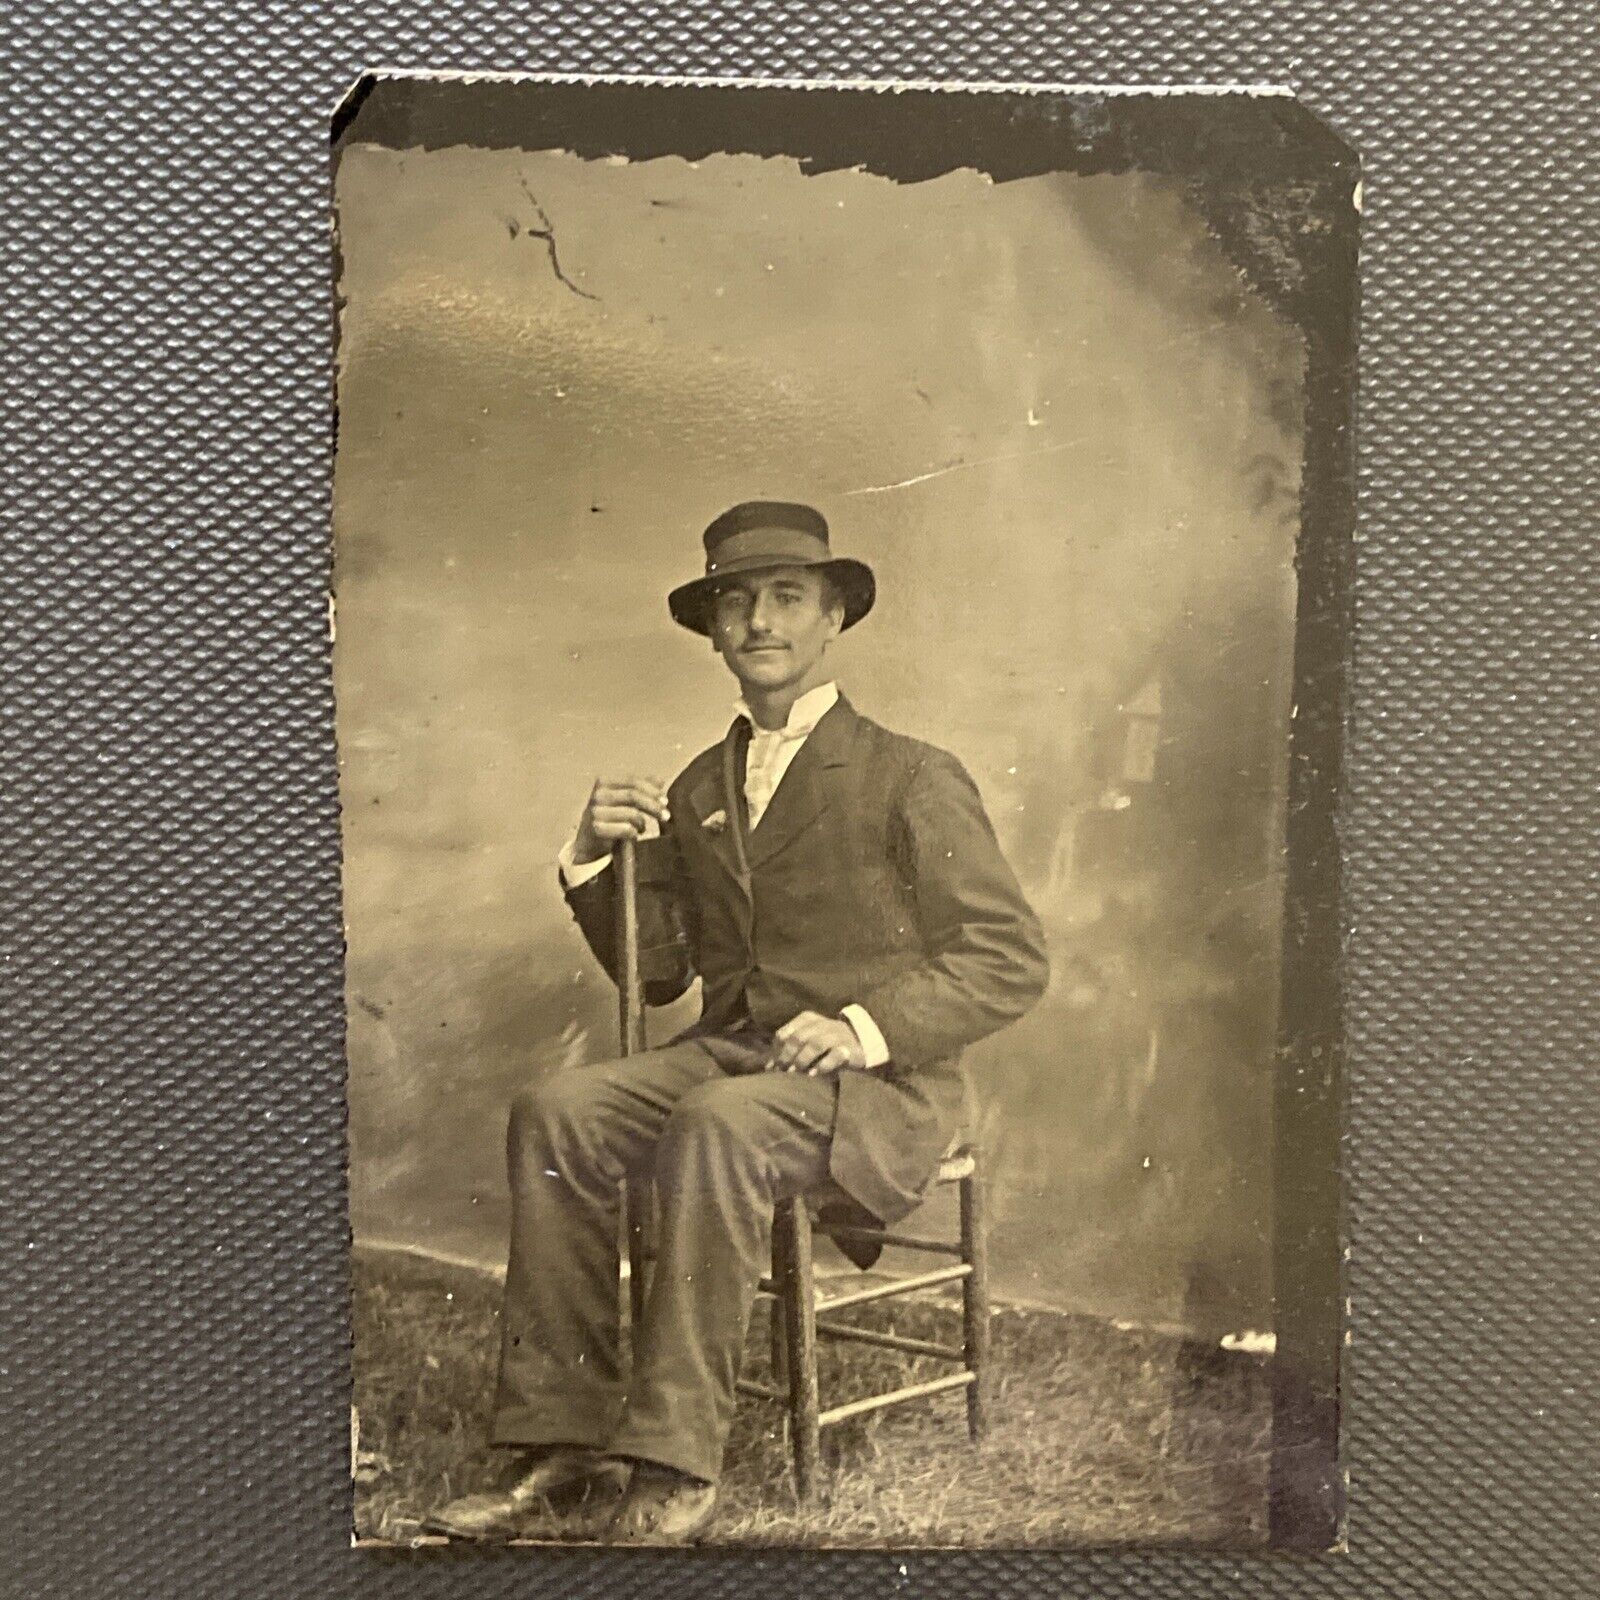 ATQ Circa 1840 1865 Tintype Dressed Up Man With Hat And Cane civil War Era